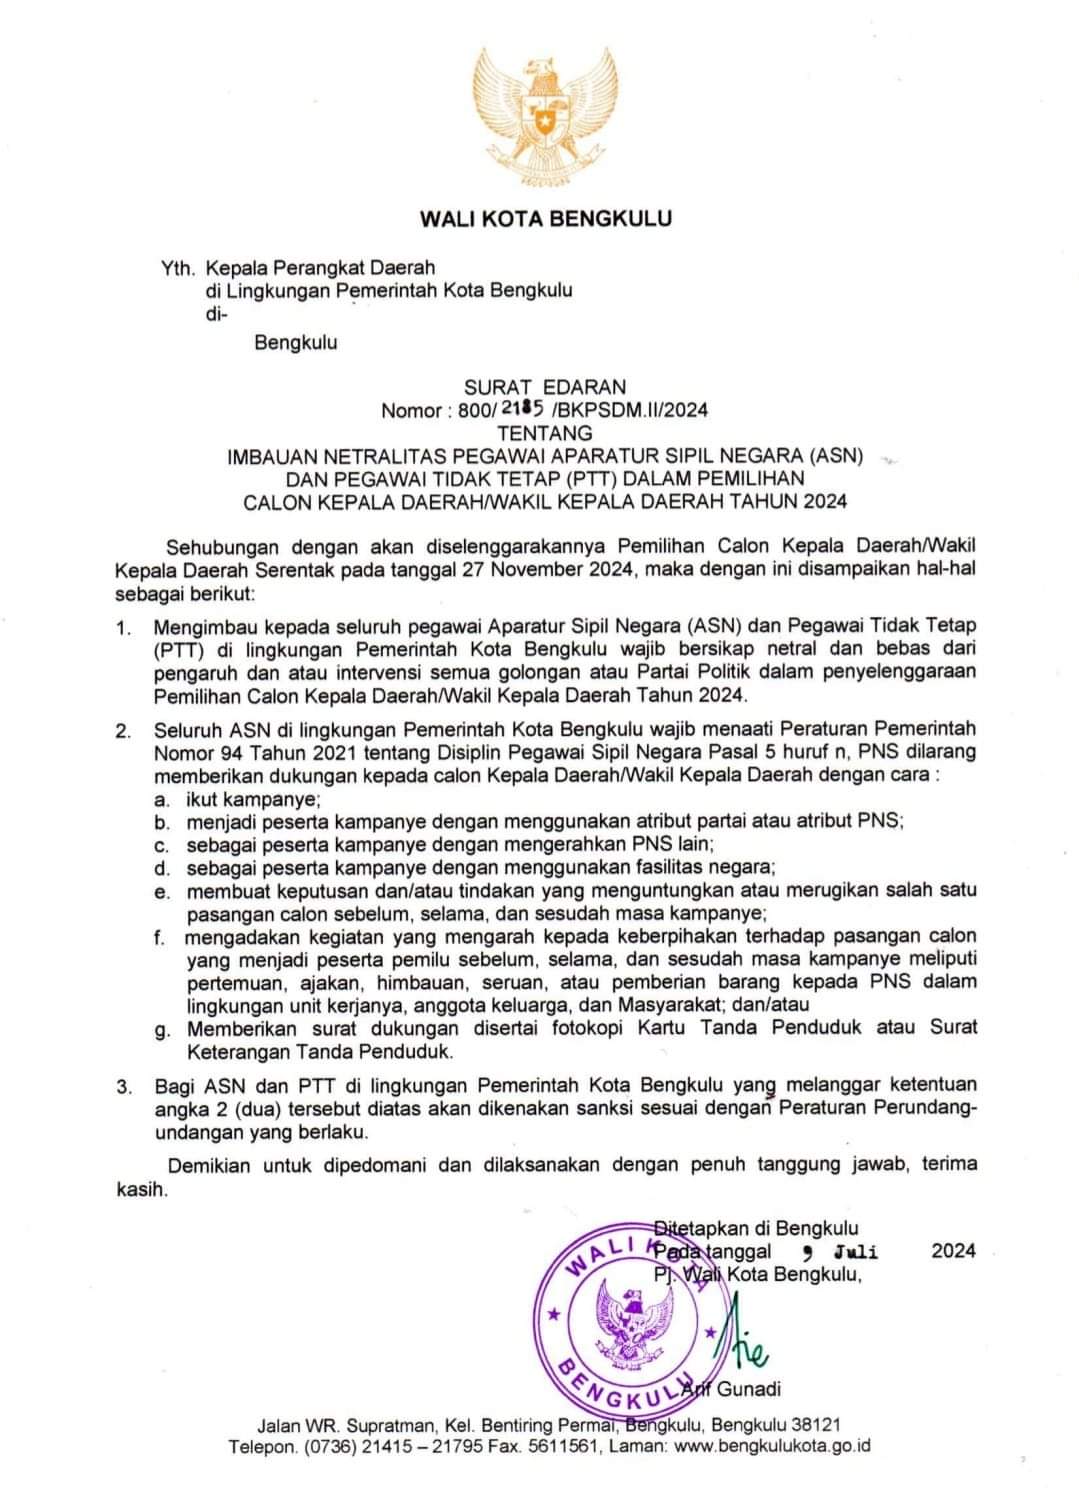 Walikota Bengkulu Keluarkan Surat Edaran Tentang Imbauan Netralitas ASN dan PTT di Pilkada 2024